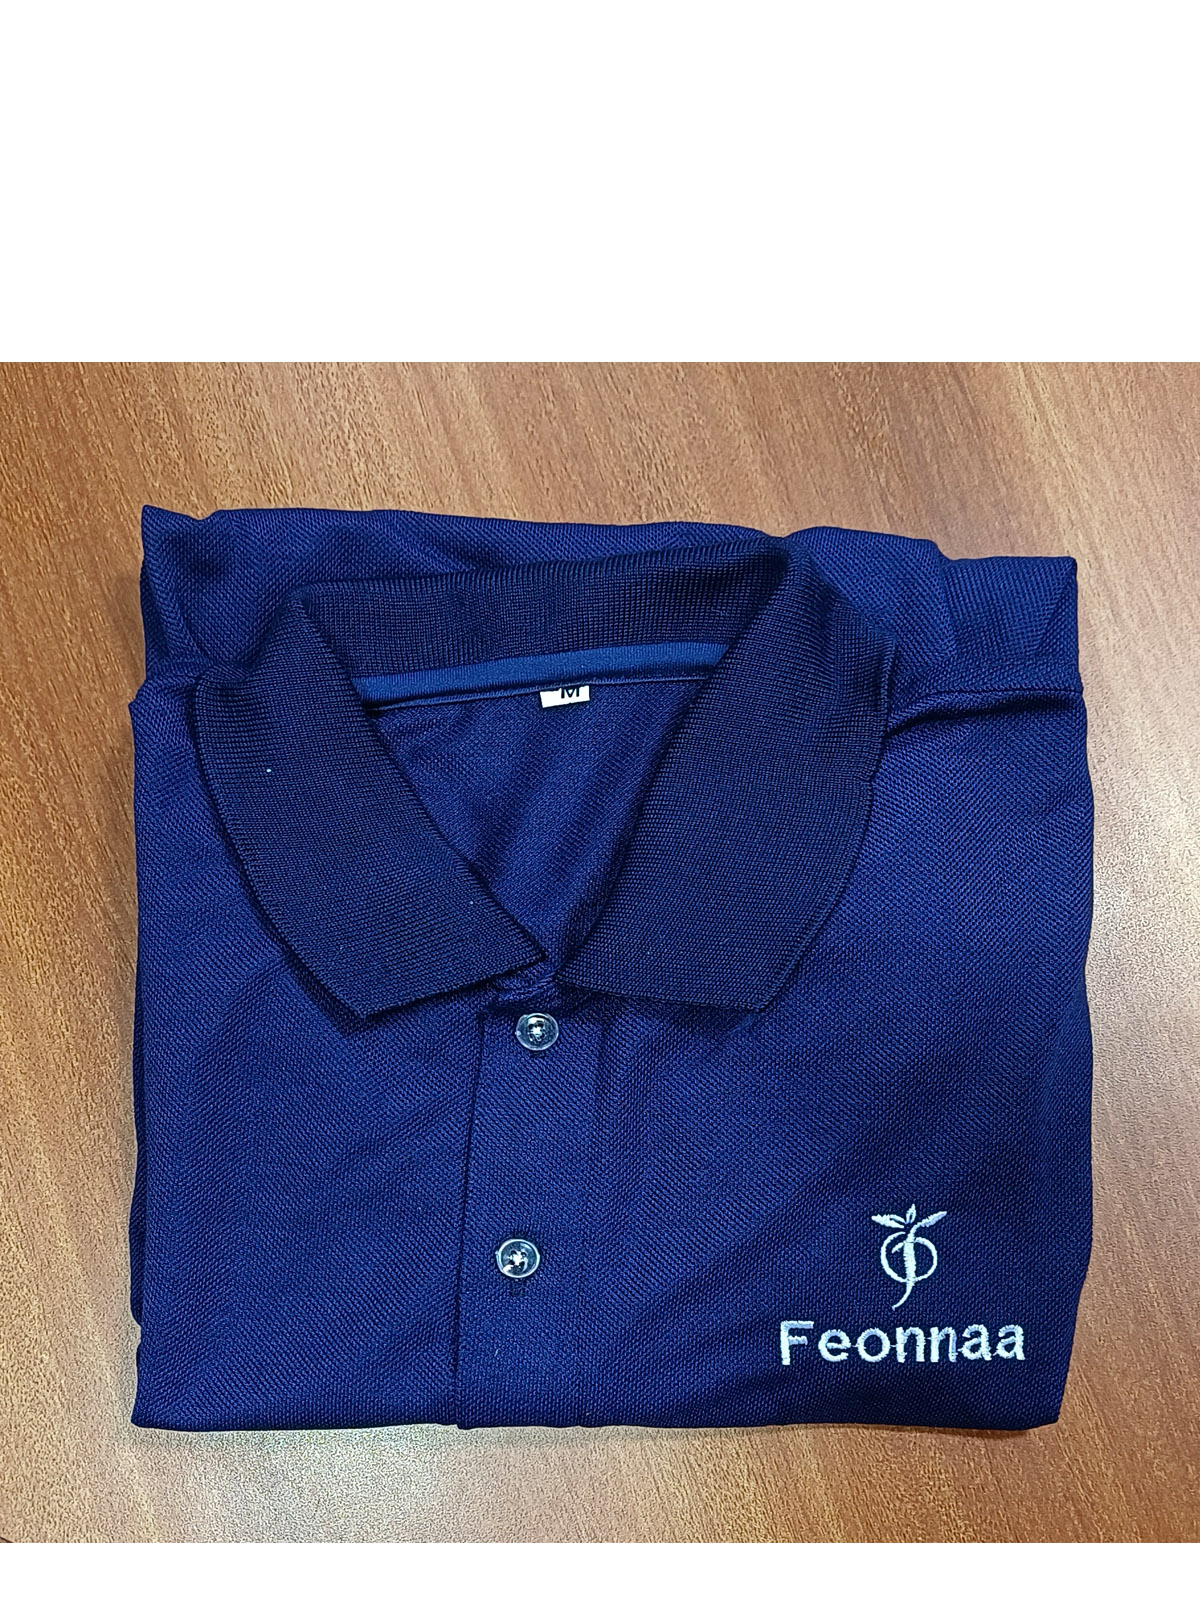 Feonnaa T-shirt